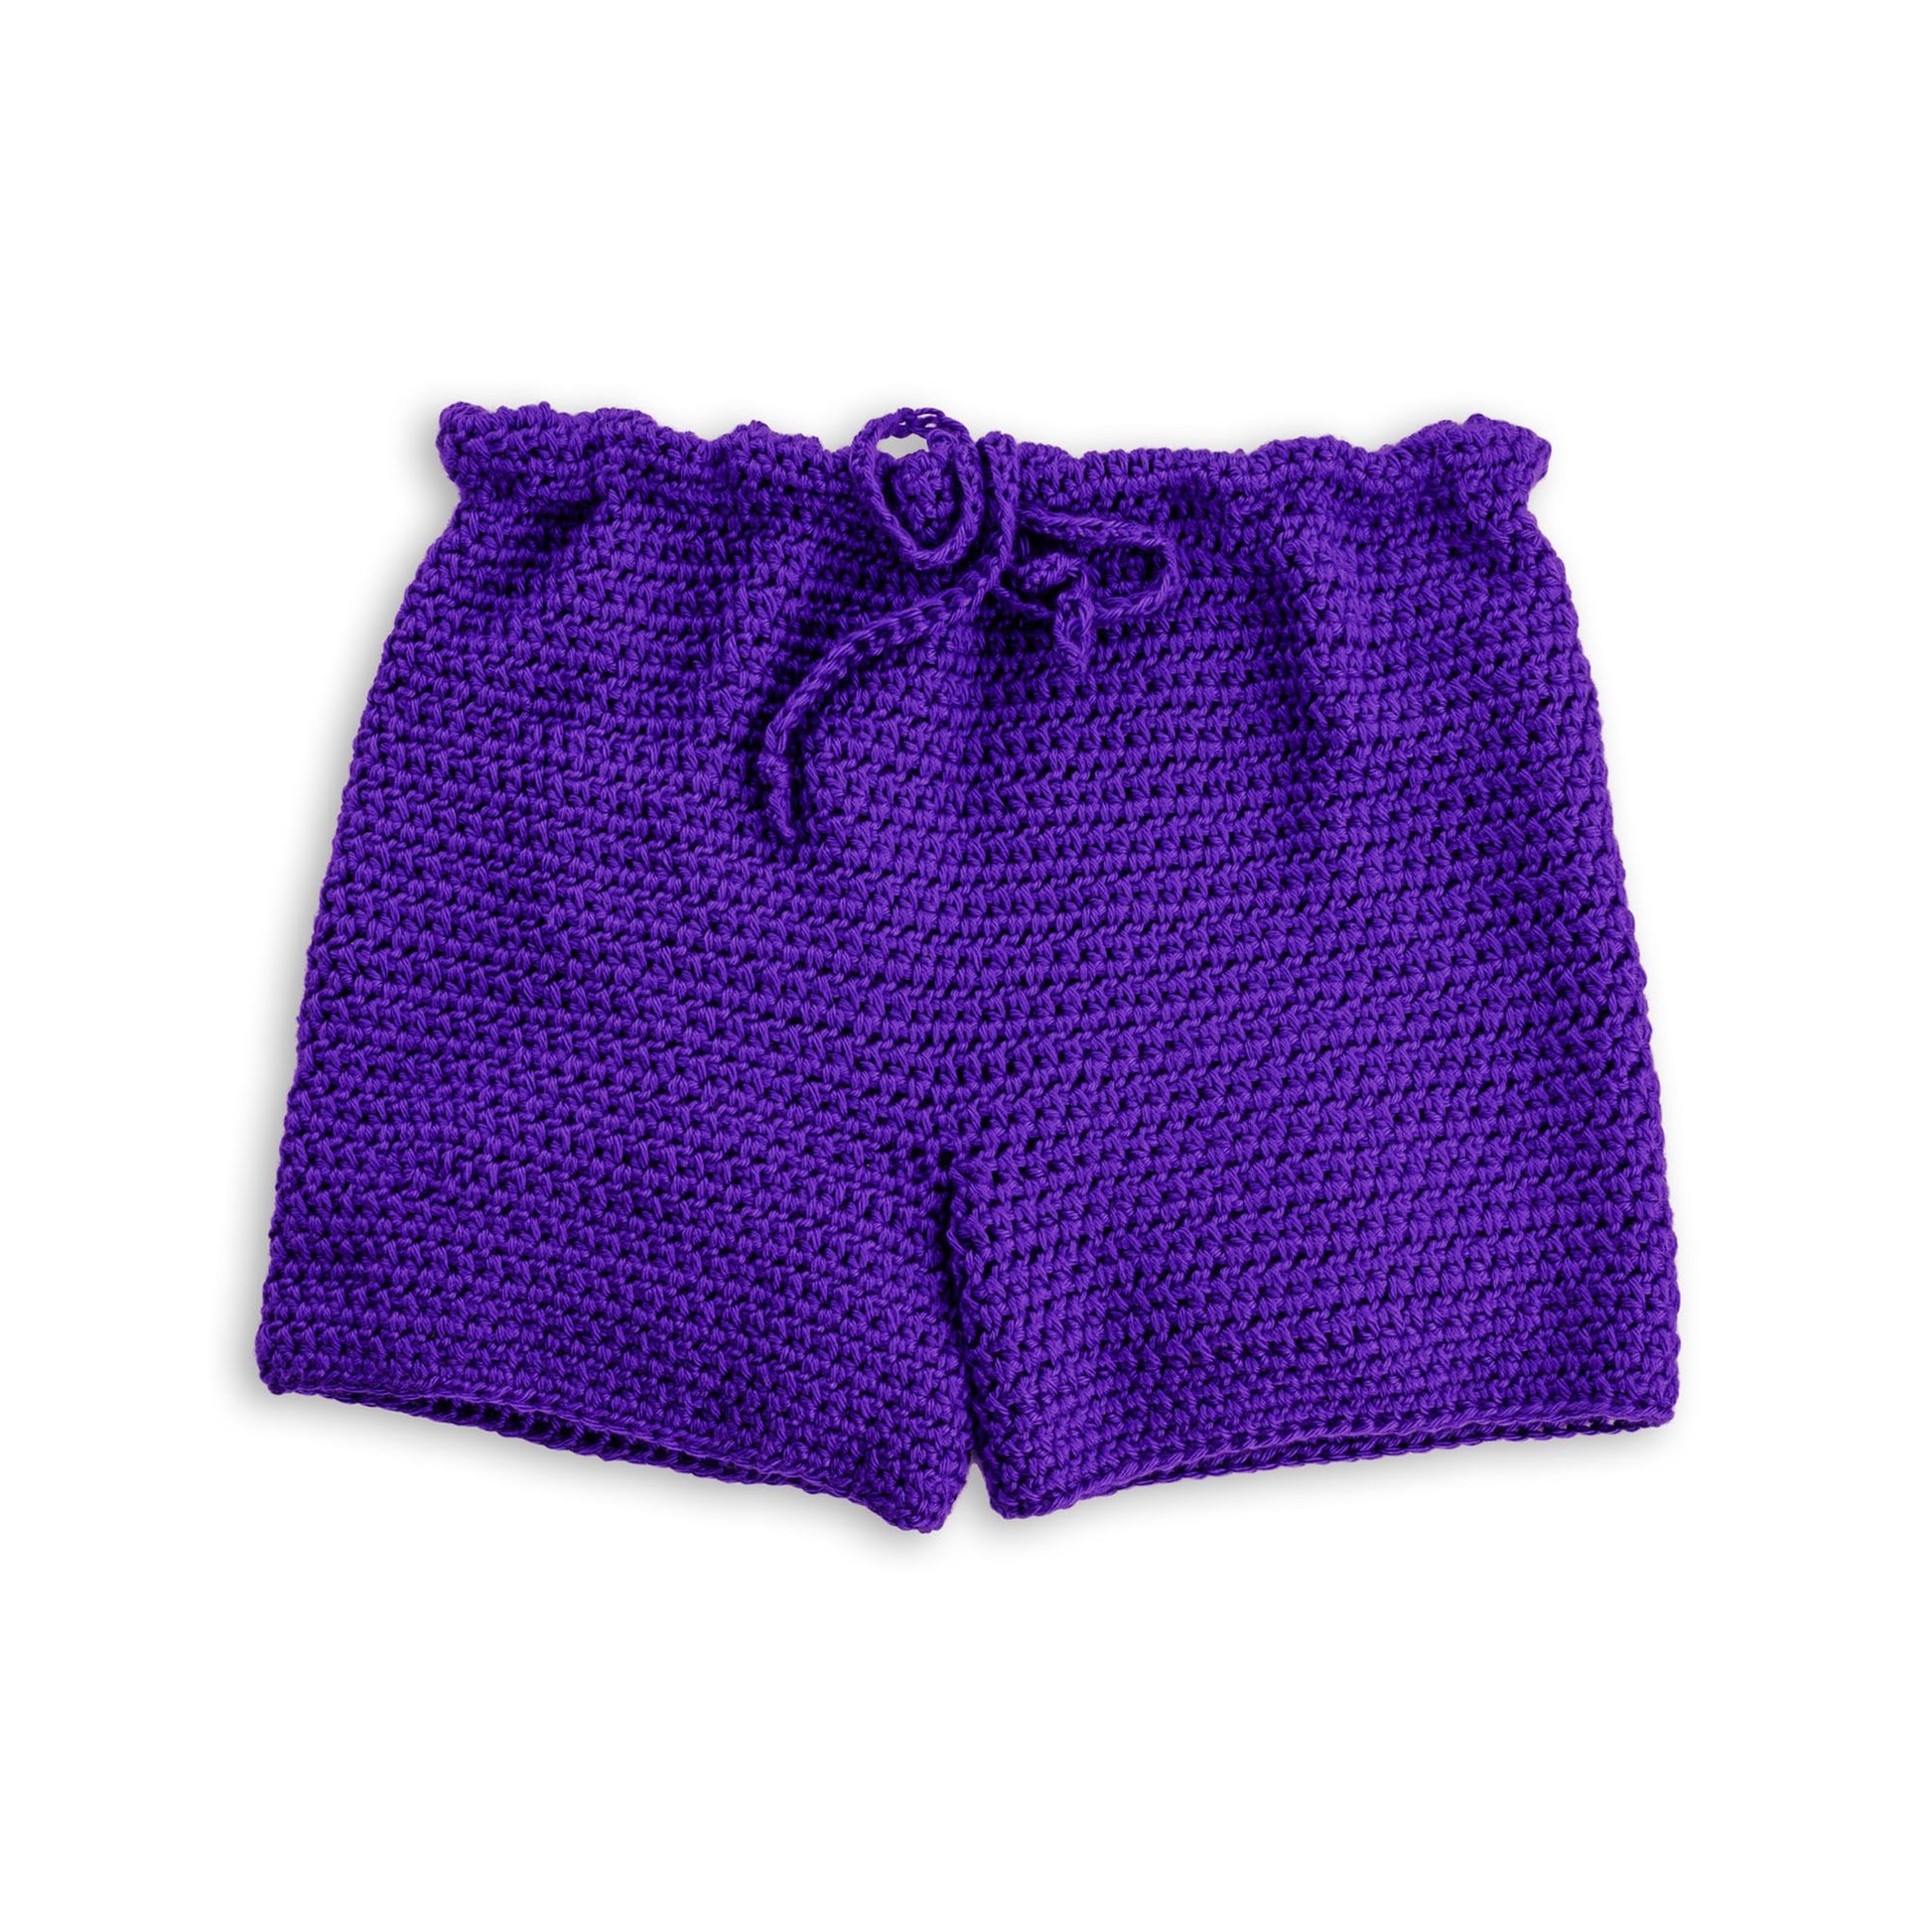 Free Caron Crochet Shorts Story Pattern